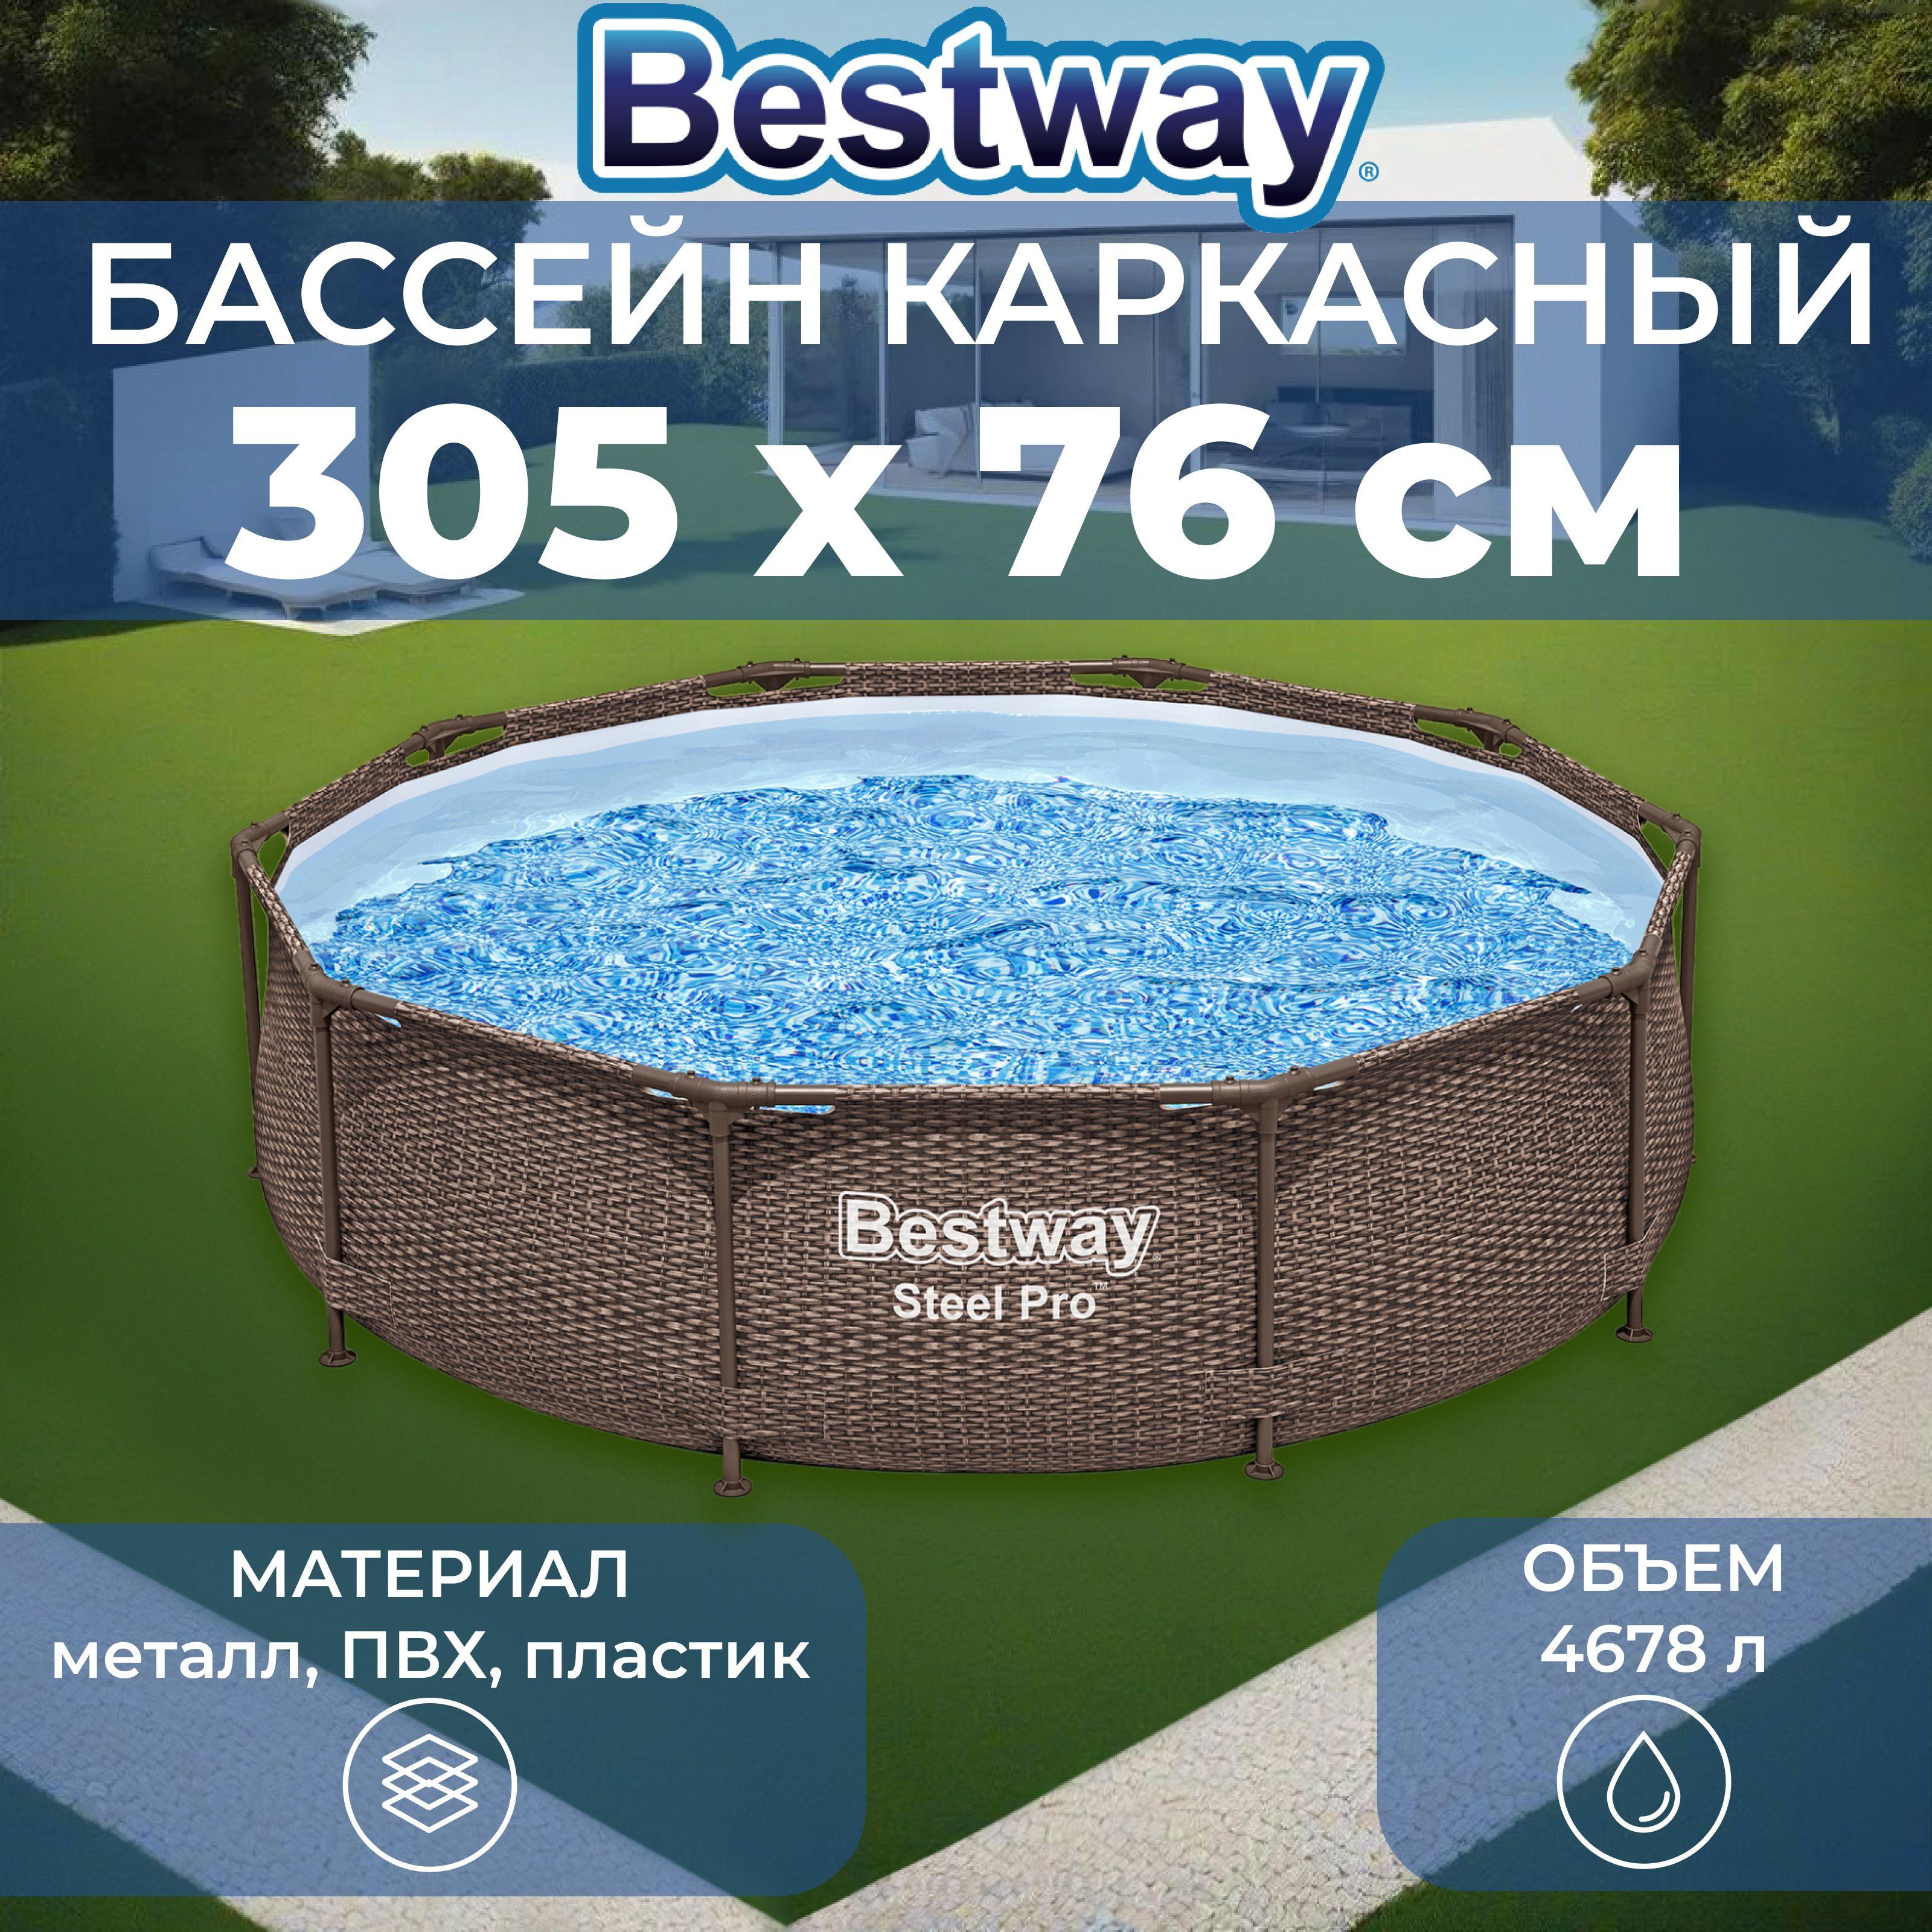 Bestway | Бассейн каркасный Steel Pro 305 х 76 см 561JE